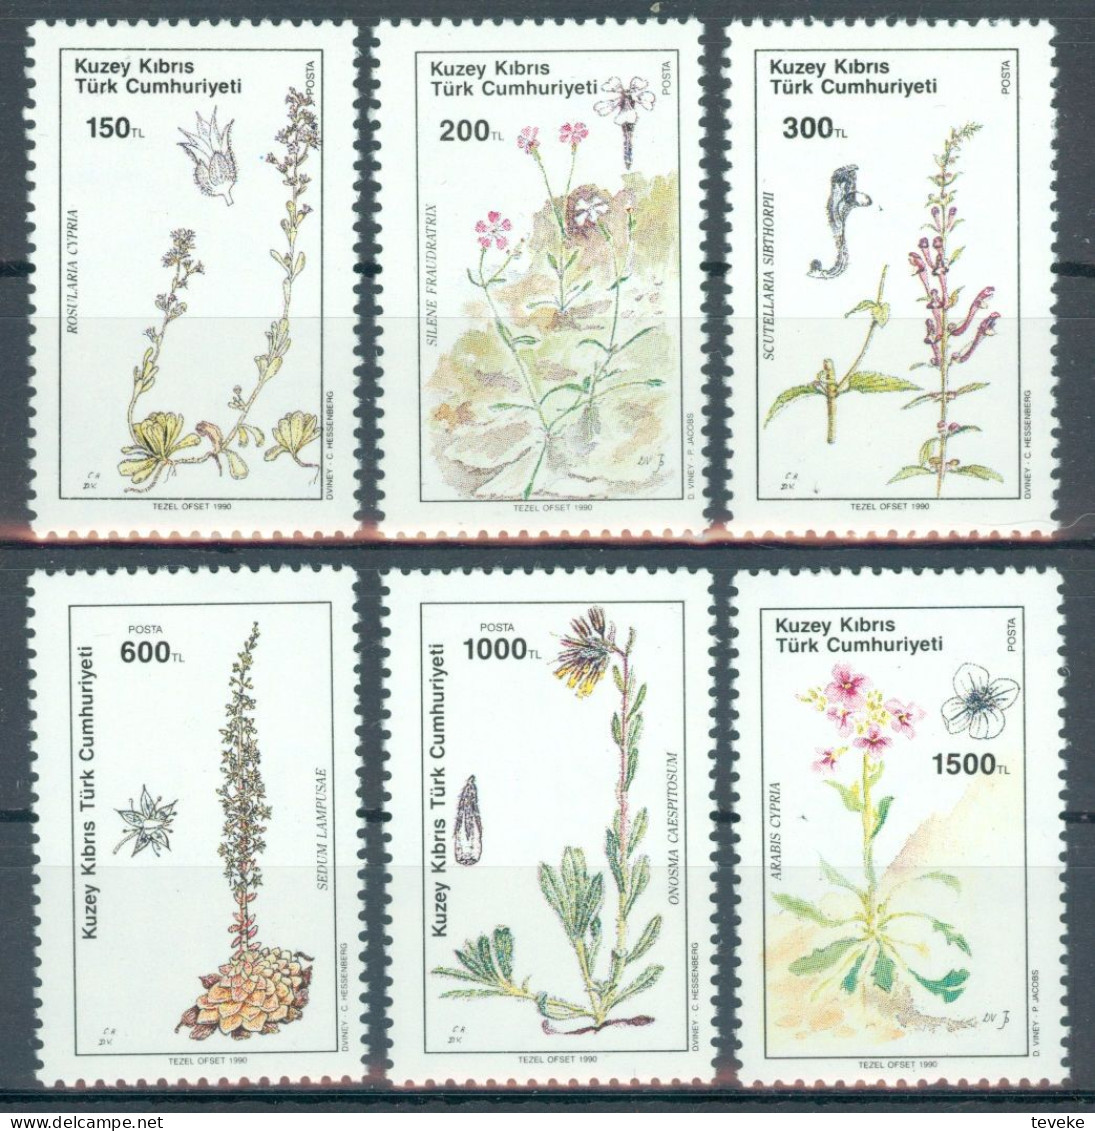 TURKISH CYPRUS 1990 - Michel Nr. 290/295 - MNH ** - Fauna - Endemic Plants - Unused Stamps